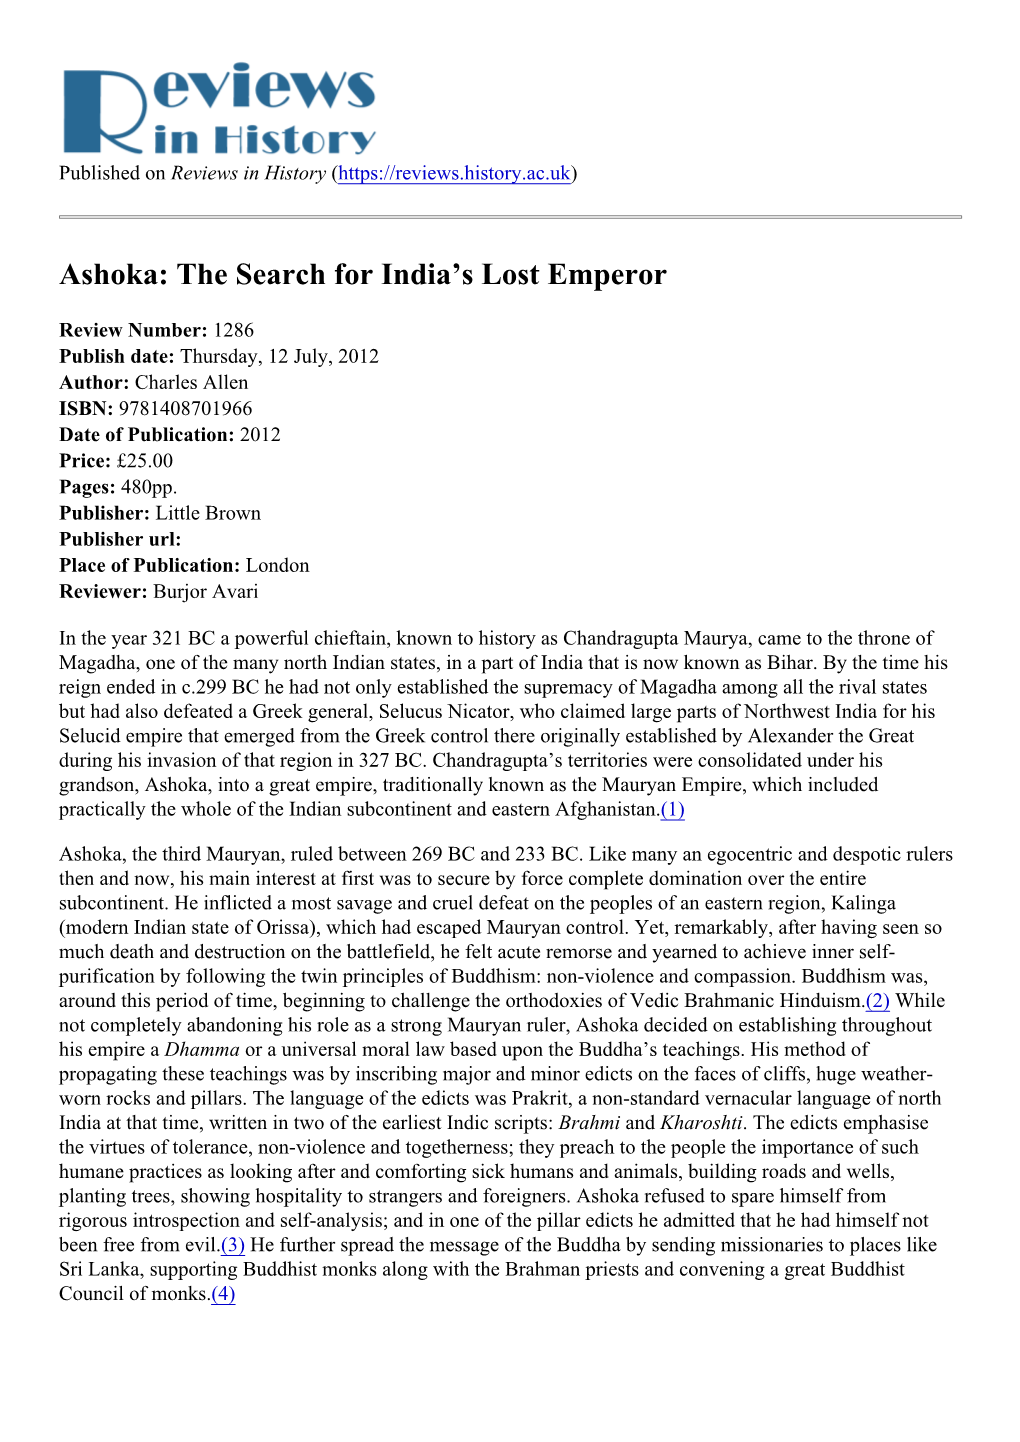 Ashoka: the Search for India's Lost Emperor